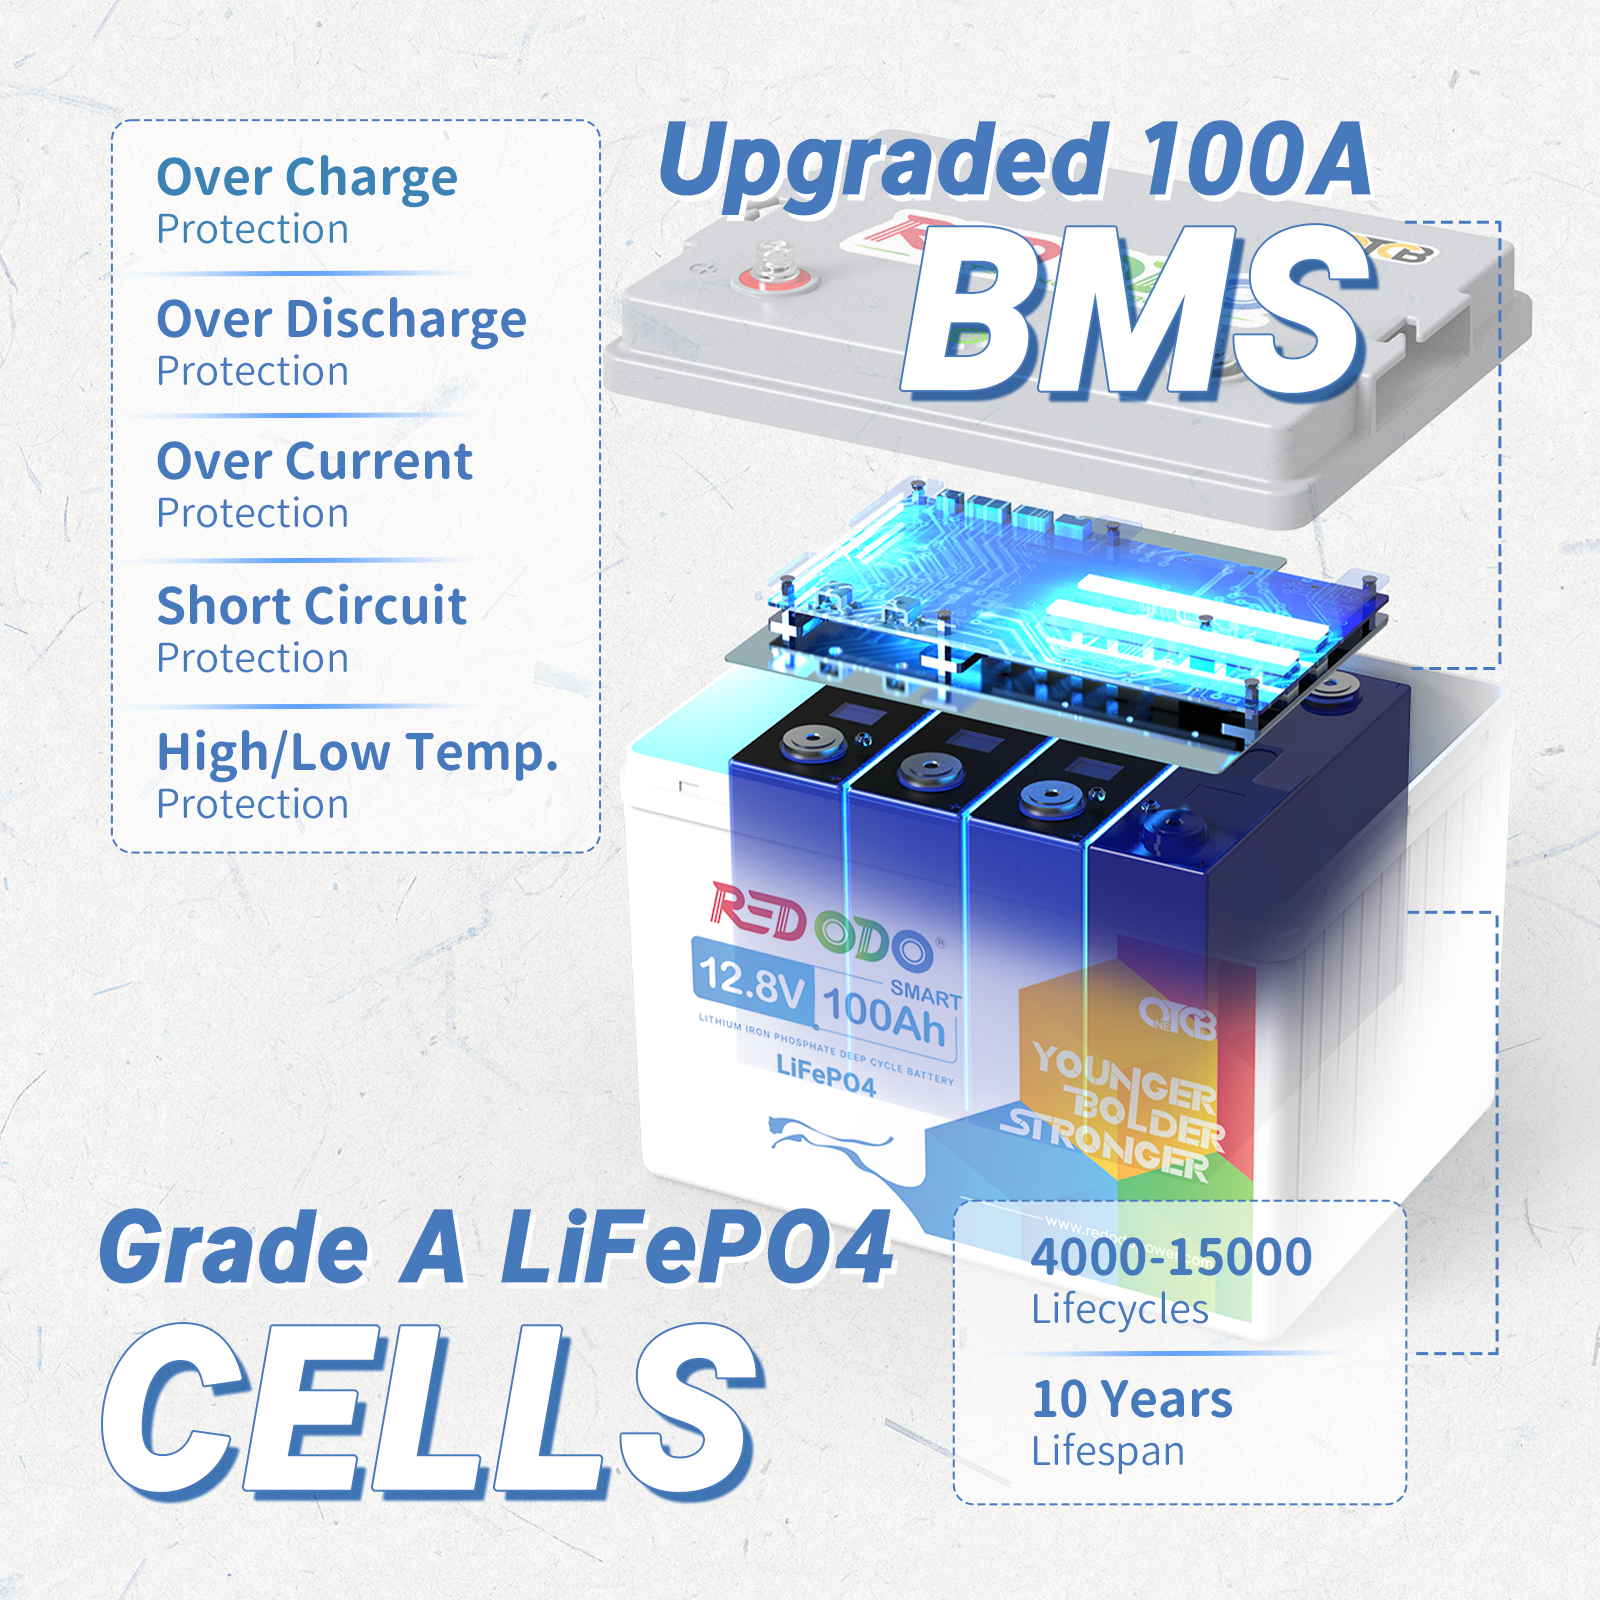 Redodo Lithium Batterie 12V 100Ah LiFePO4 Solarbatterie für Solar